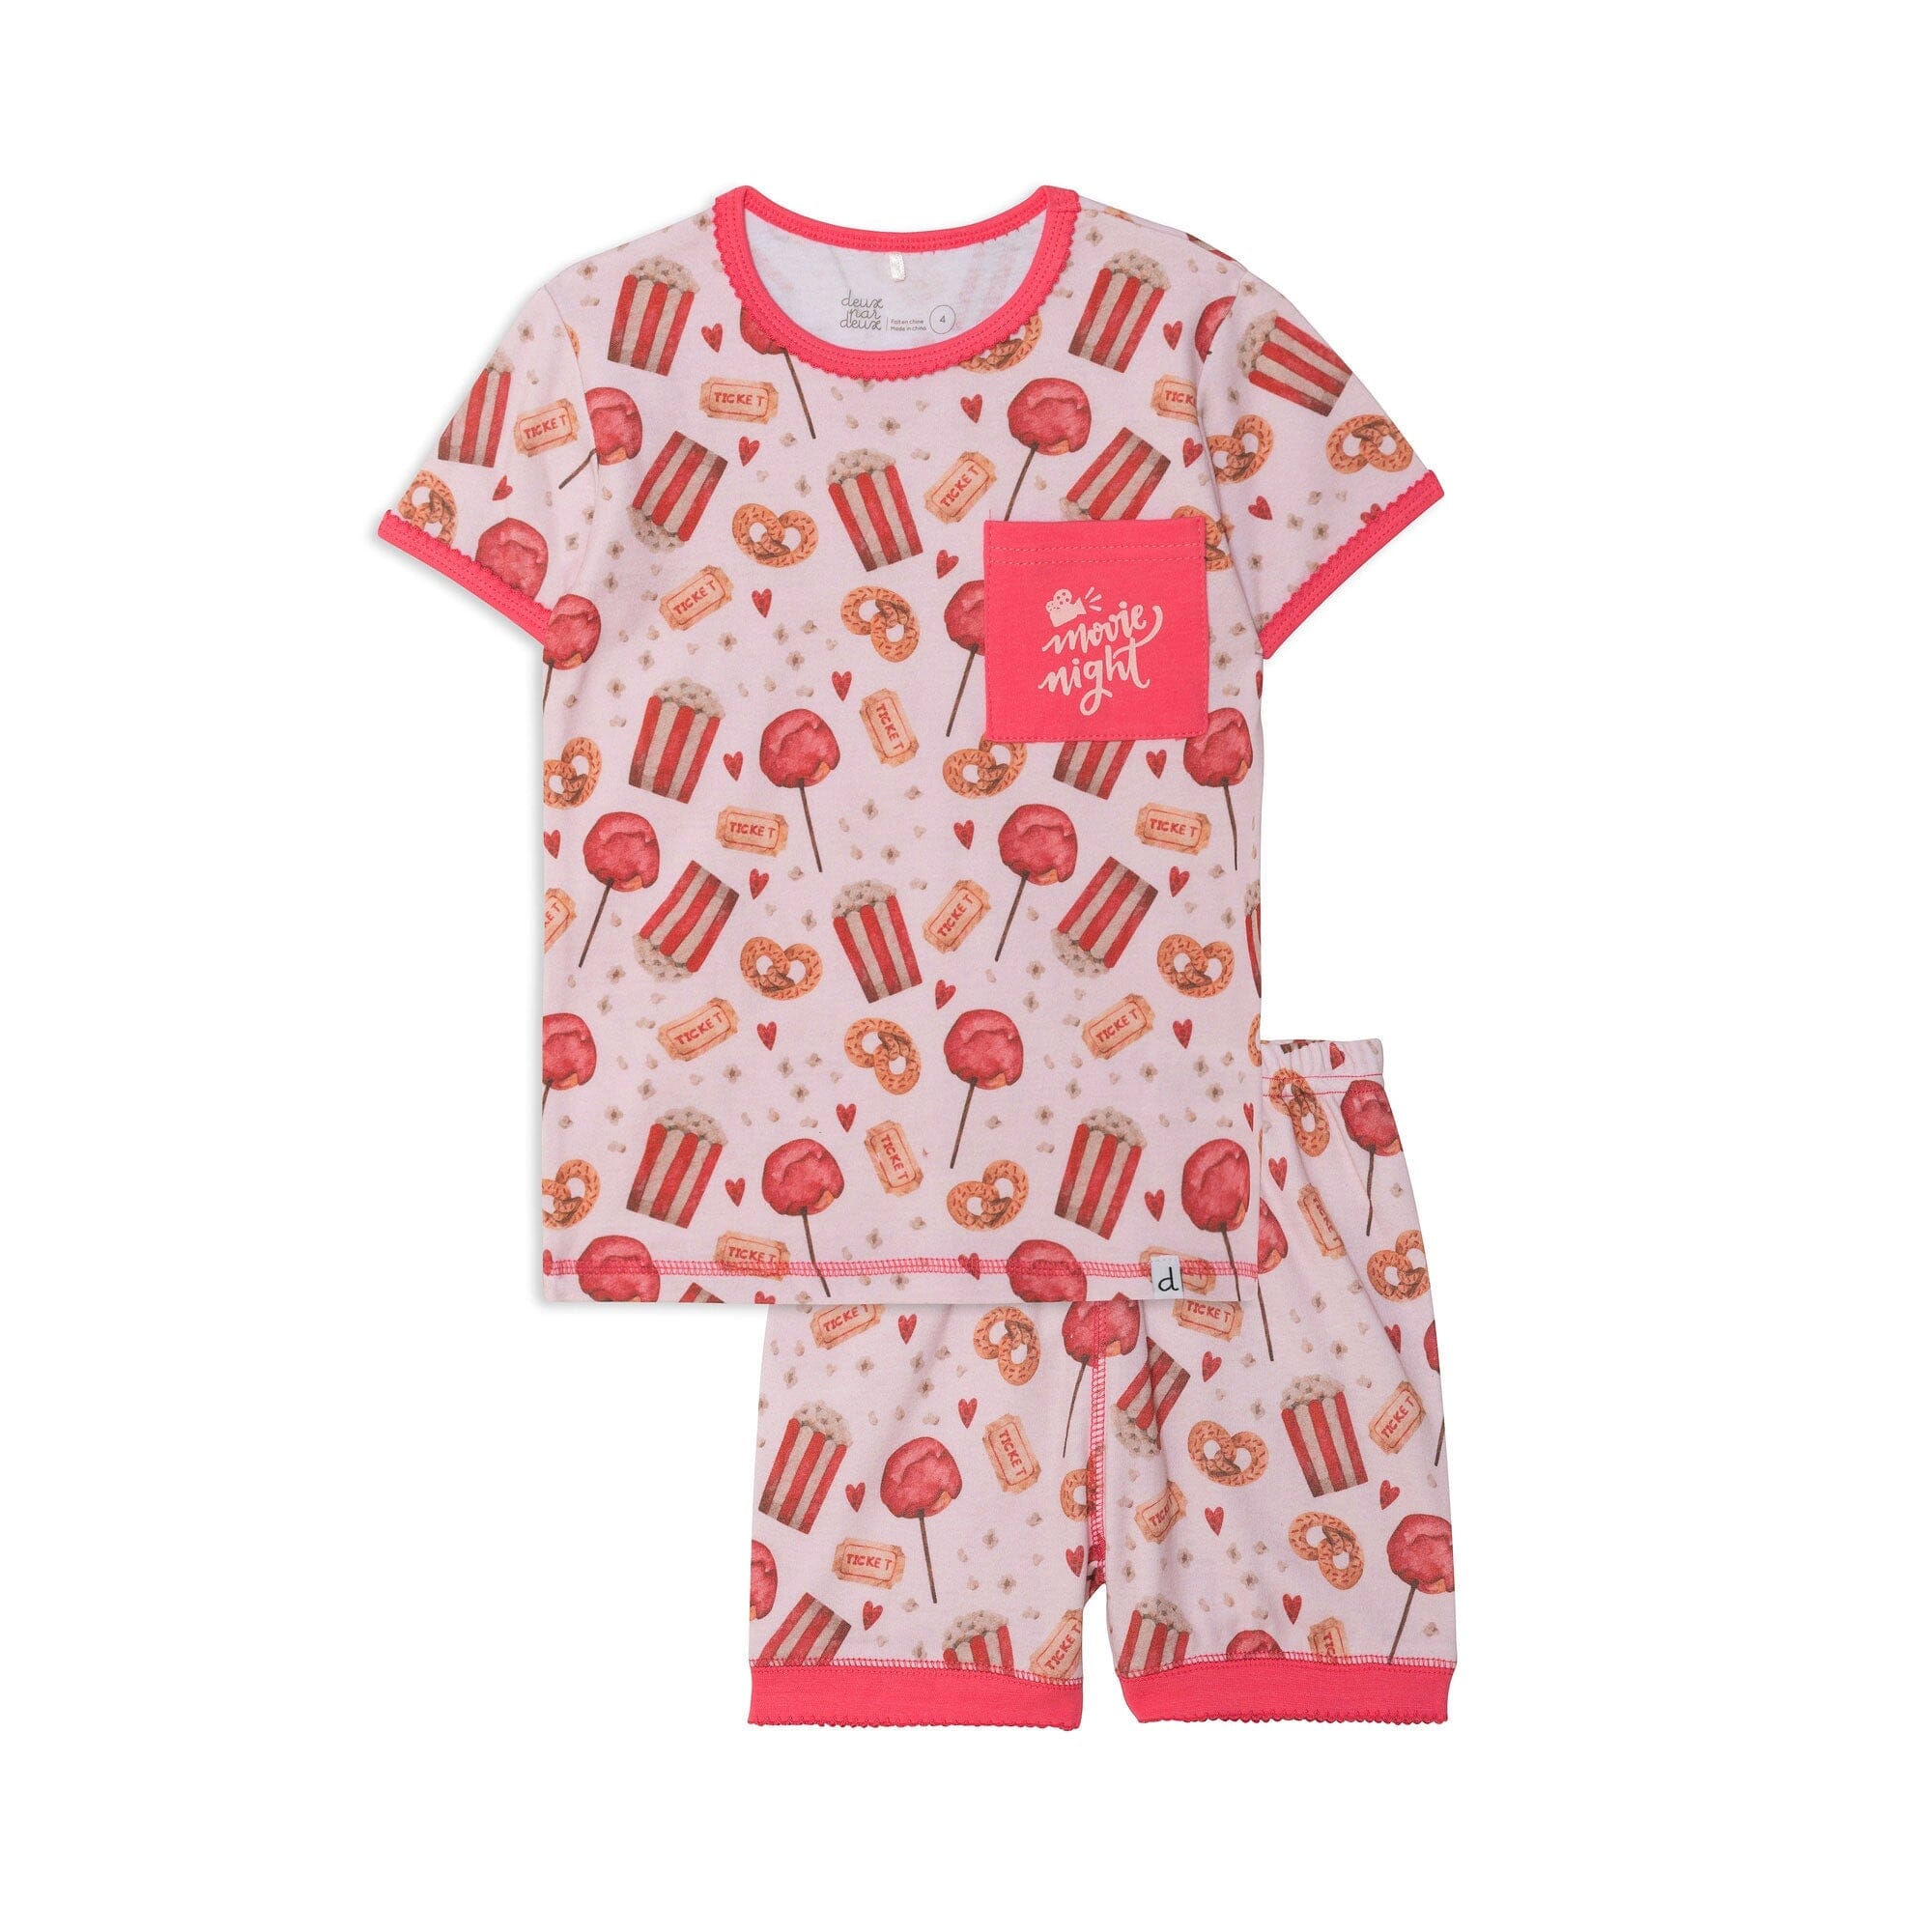 Organic Cotton Two Piece Short Pajama Set Light Pink Popcorn & Lollipop Print - E30PG15_032